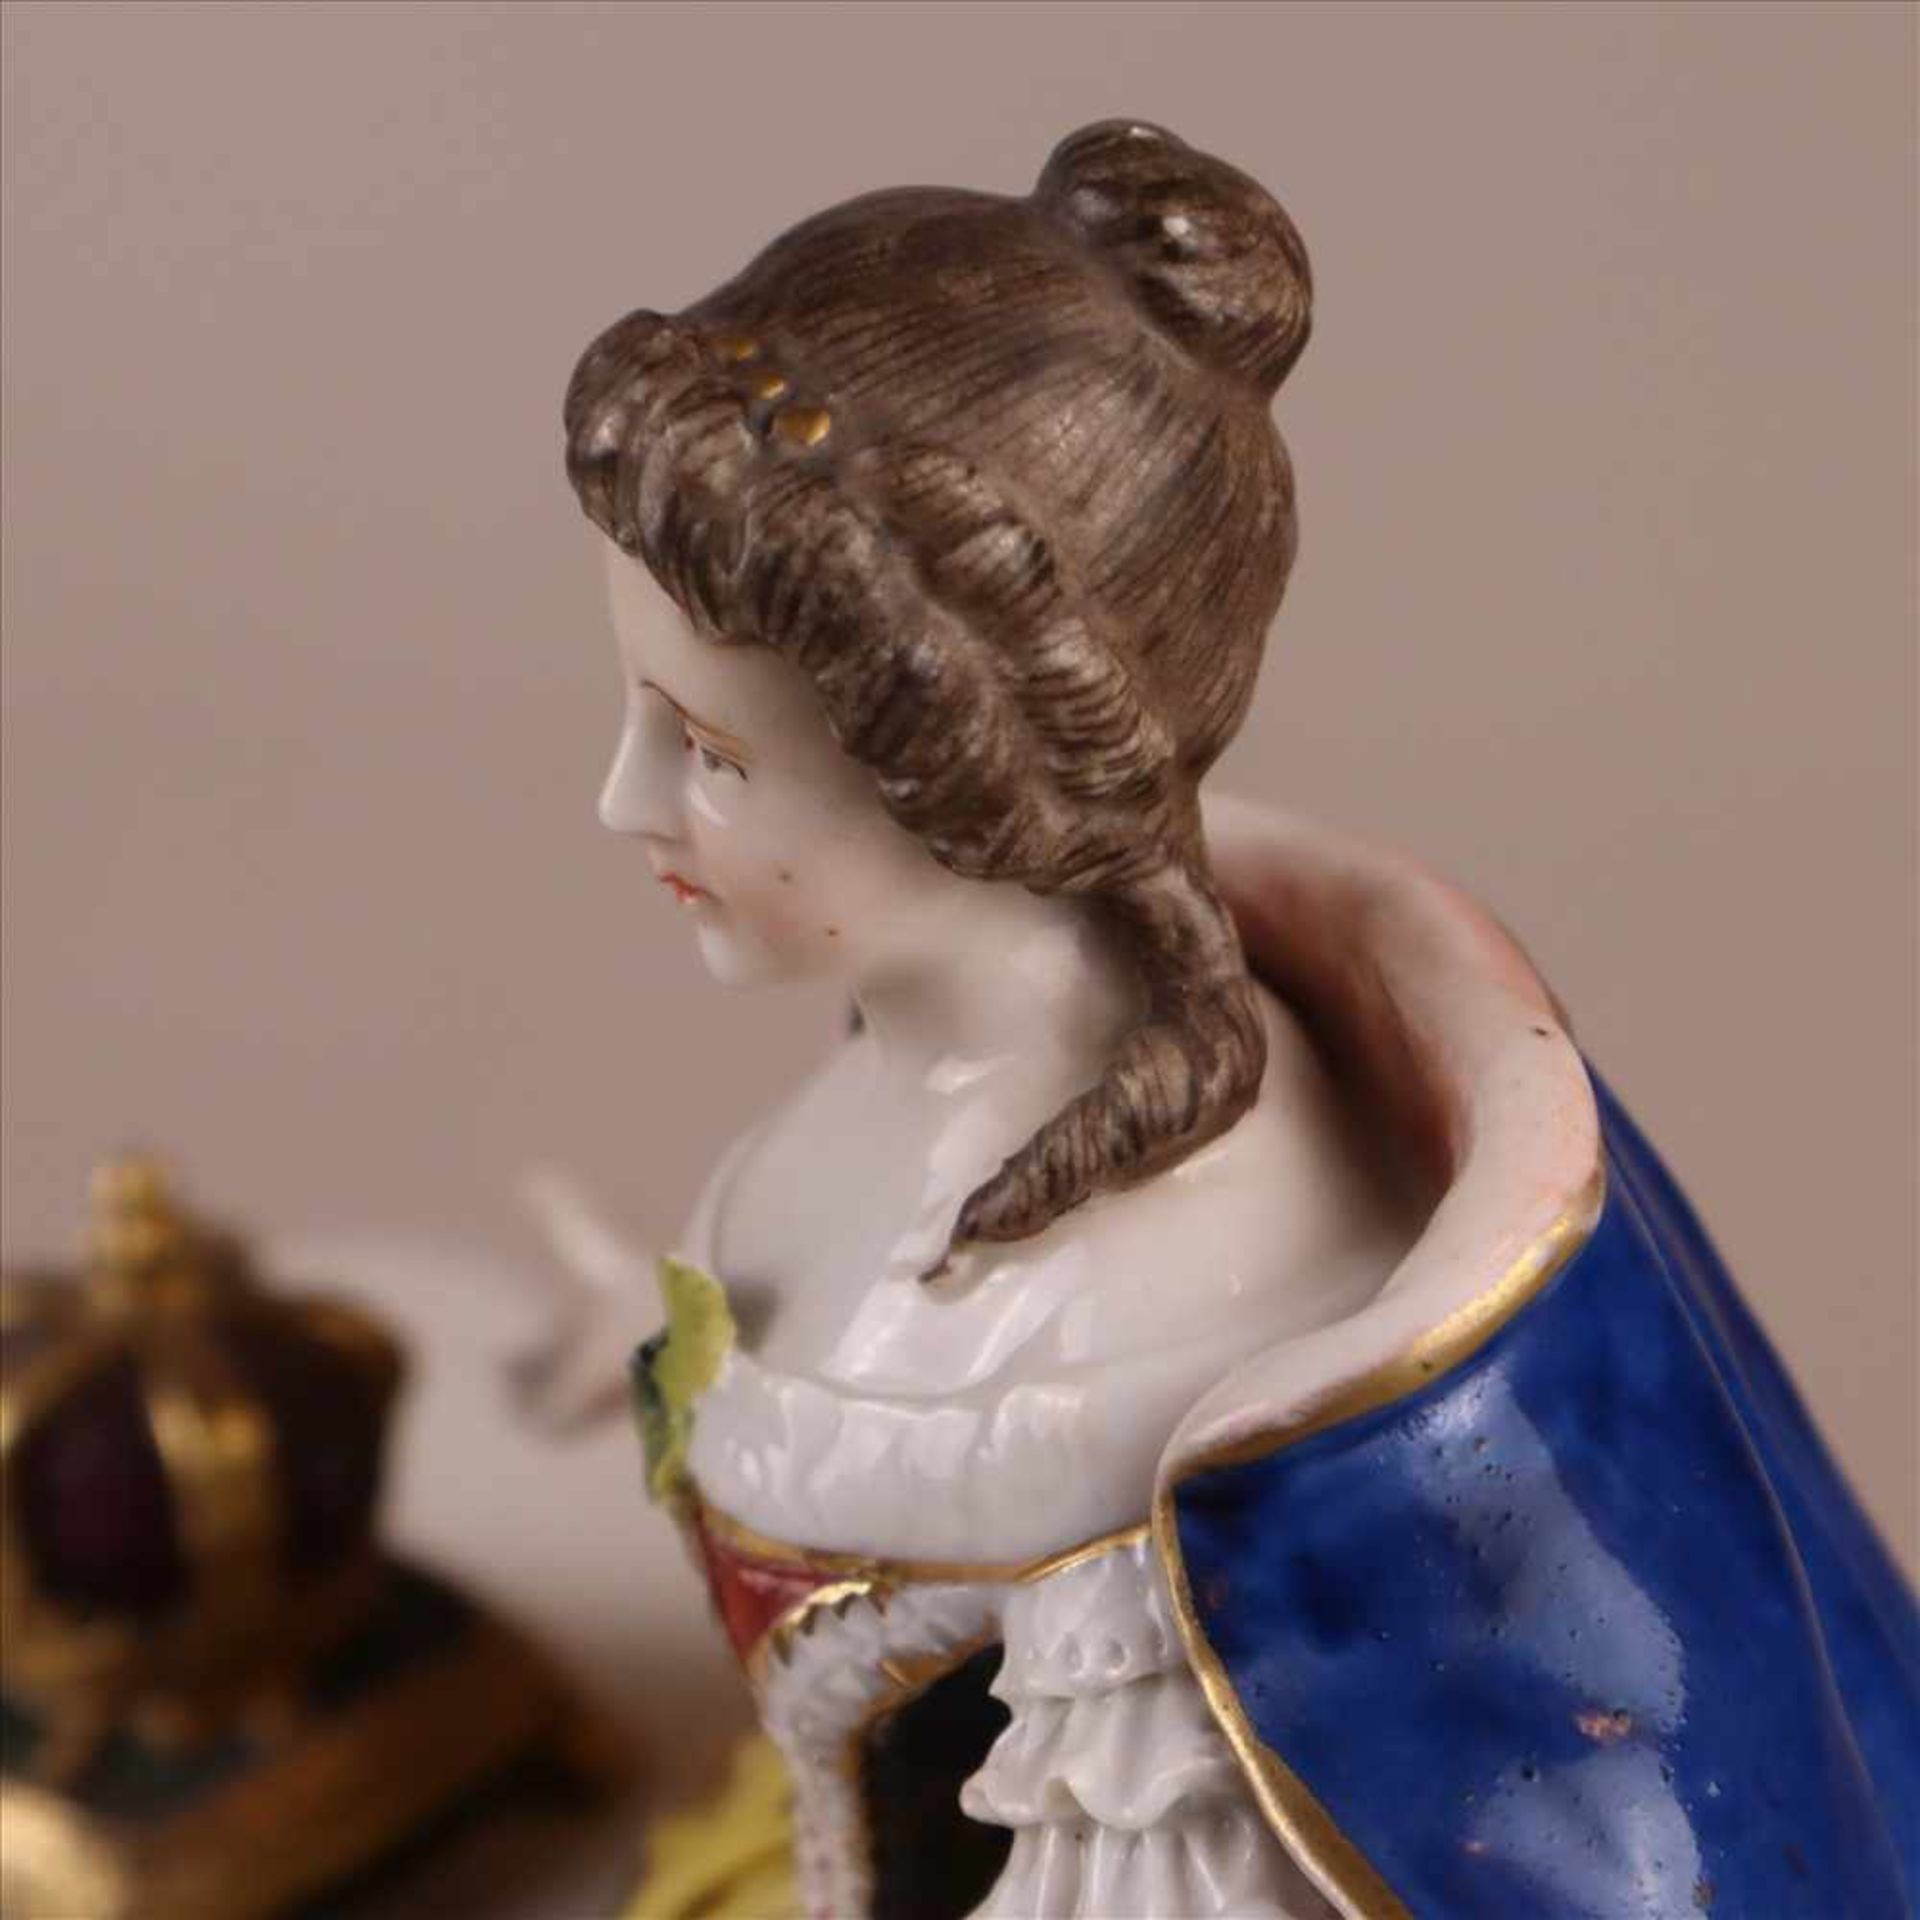 Porzellanskulptur "Königin" - Ludwigsburg, unterglasurblaue Manufakturmarke 1793-95, - Bild 4 aus 14